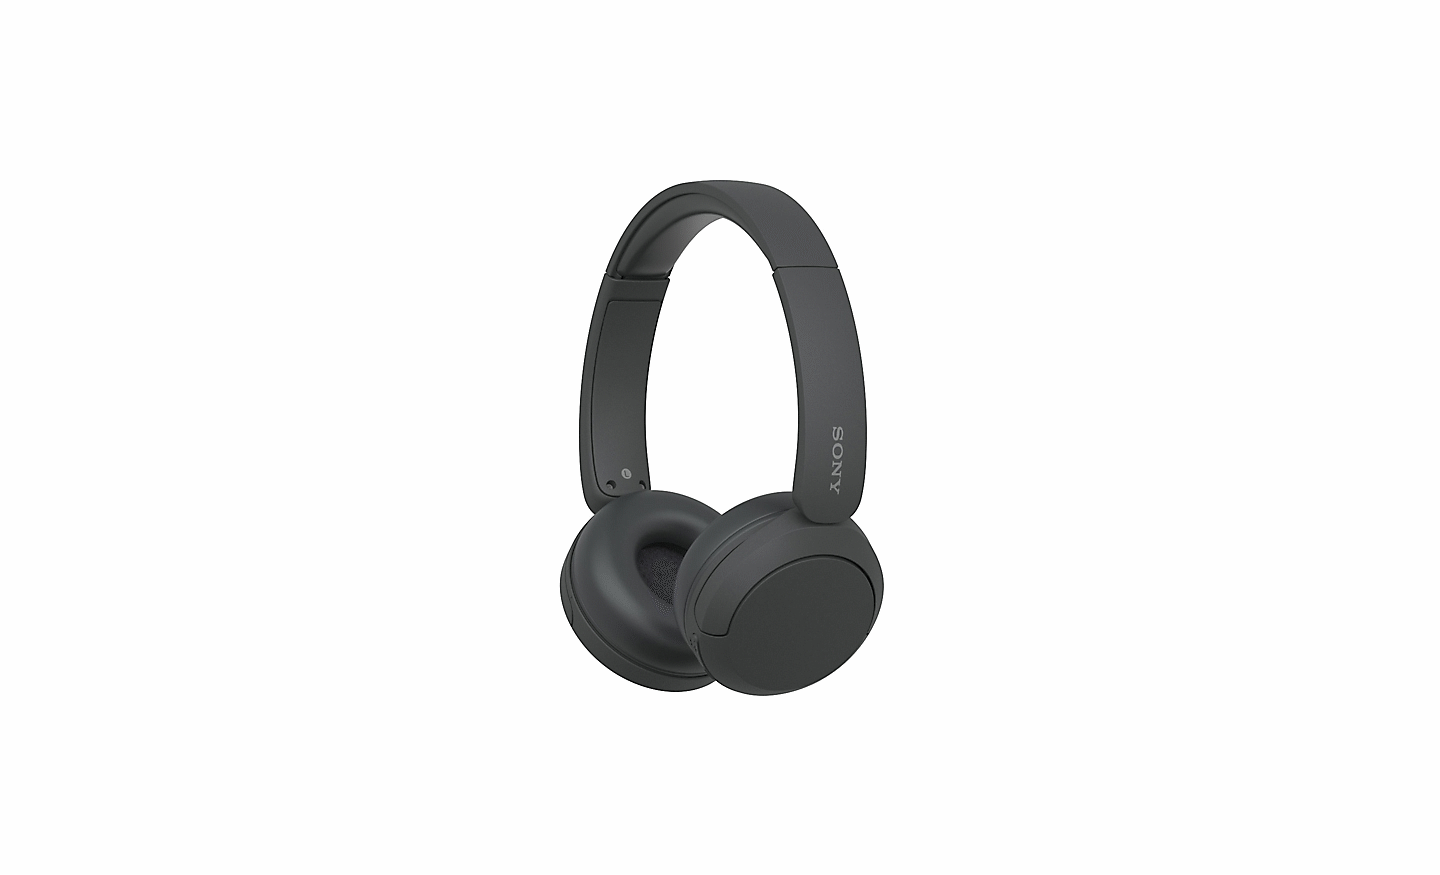 Slika črnih slušalk Sony WH-CH520 na belem ozadju